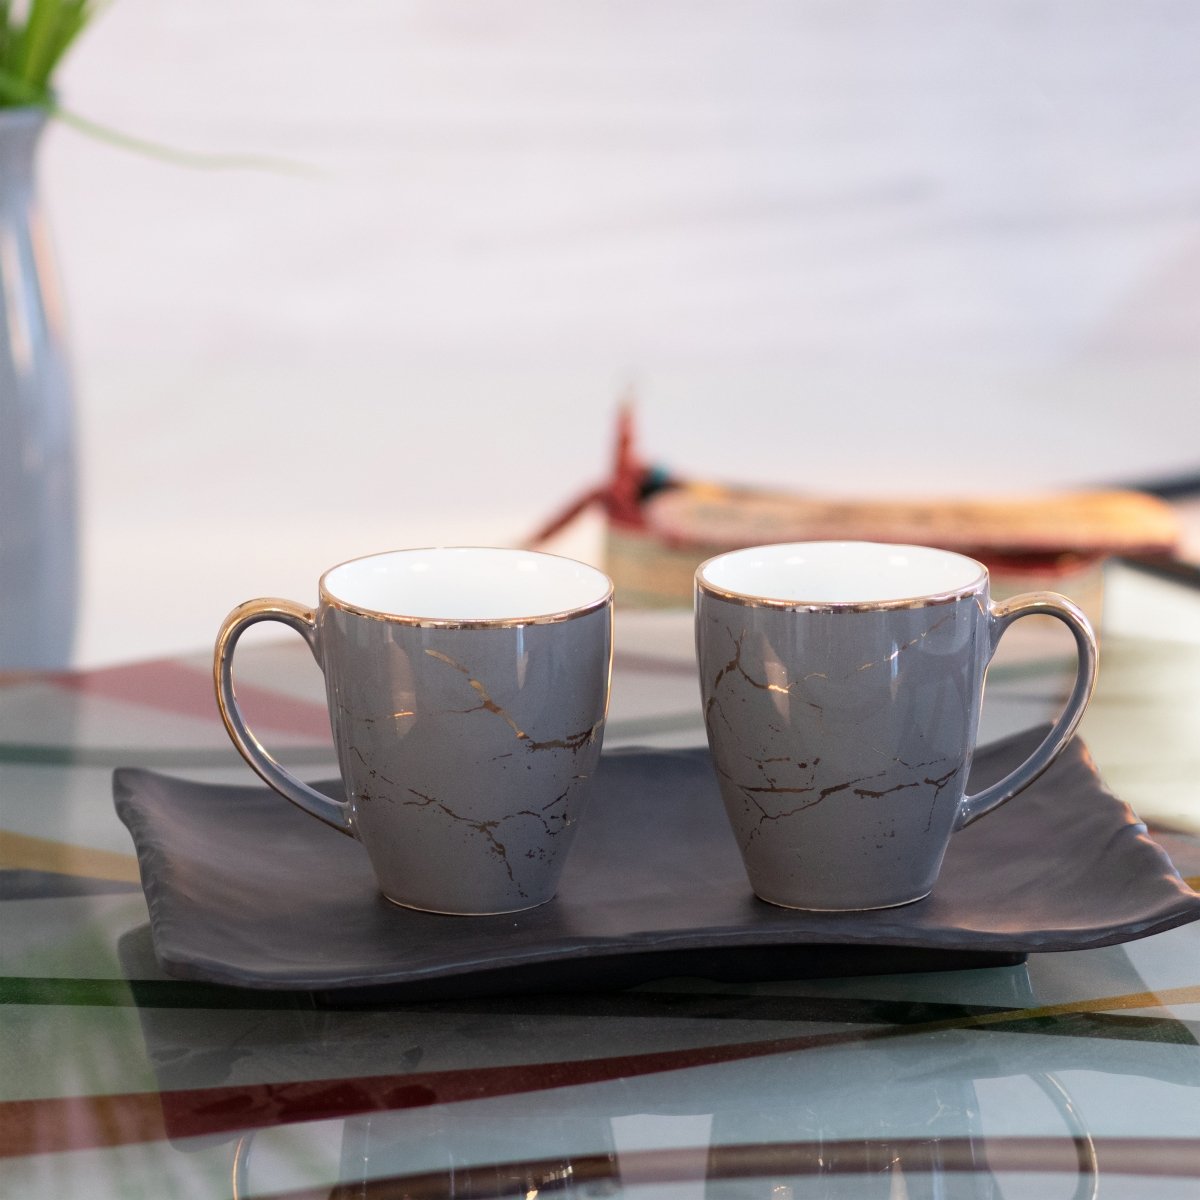 Premium Porcelain Grey and Gold Marble Finish - 6 Pcs Mug Set Serves as Tea Cups, Coffee Cups, Tea Mugs, Coffee Mugs